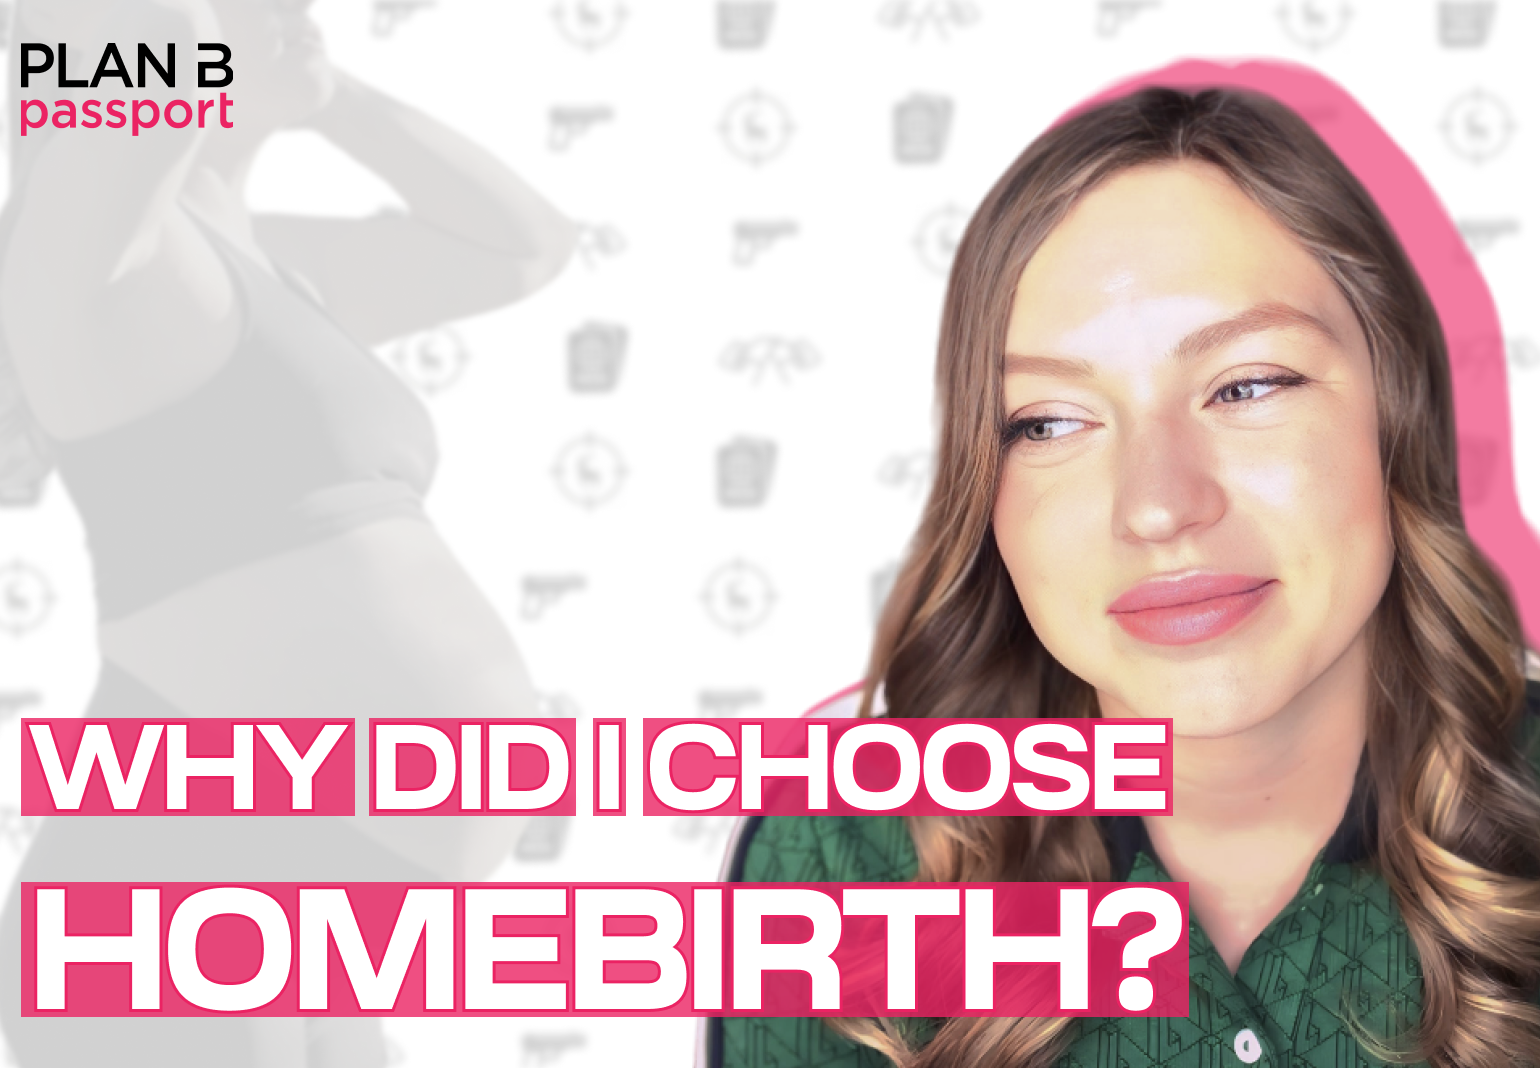 Why did I choose home birth